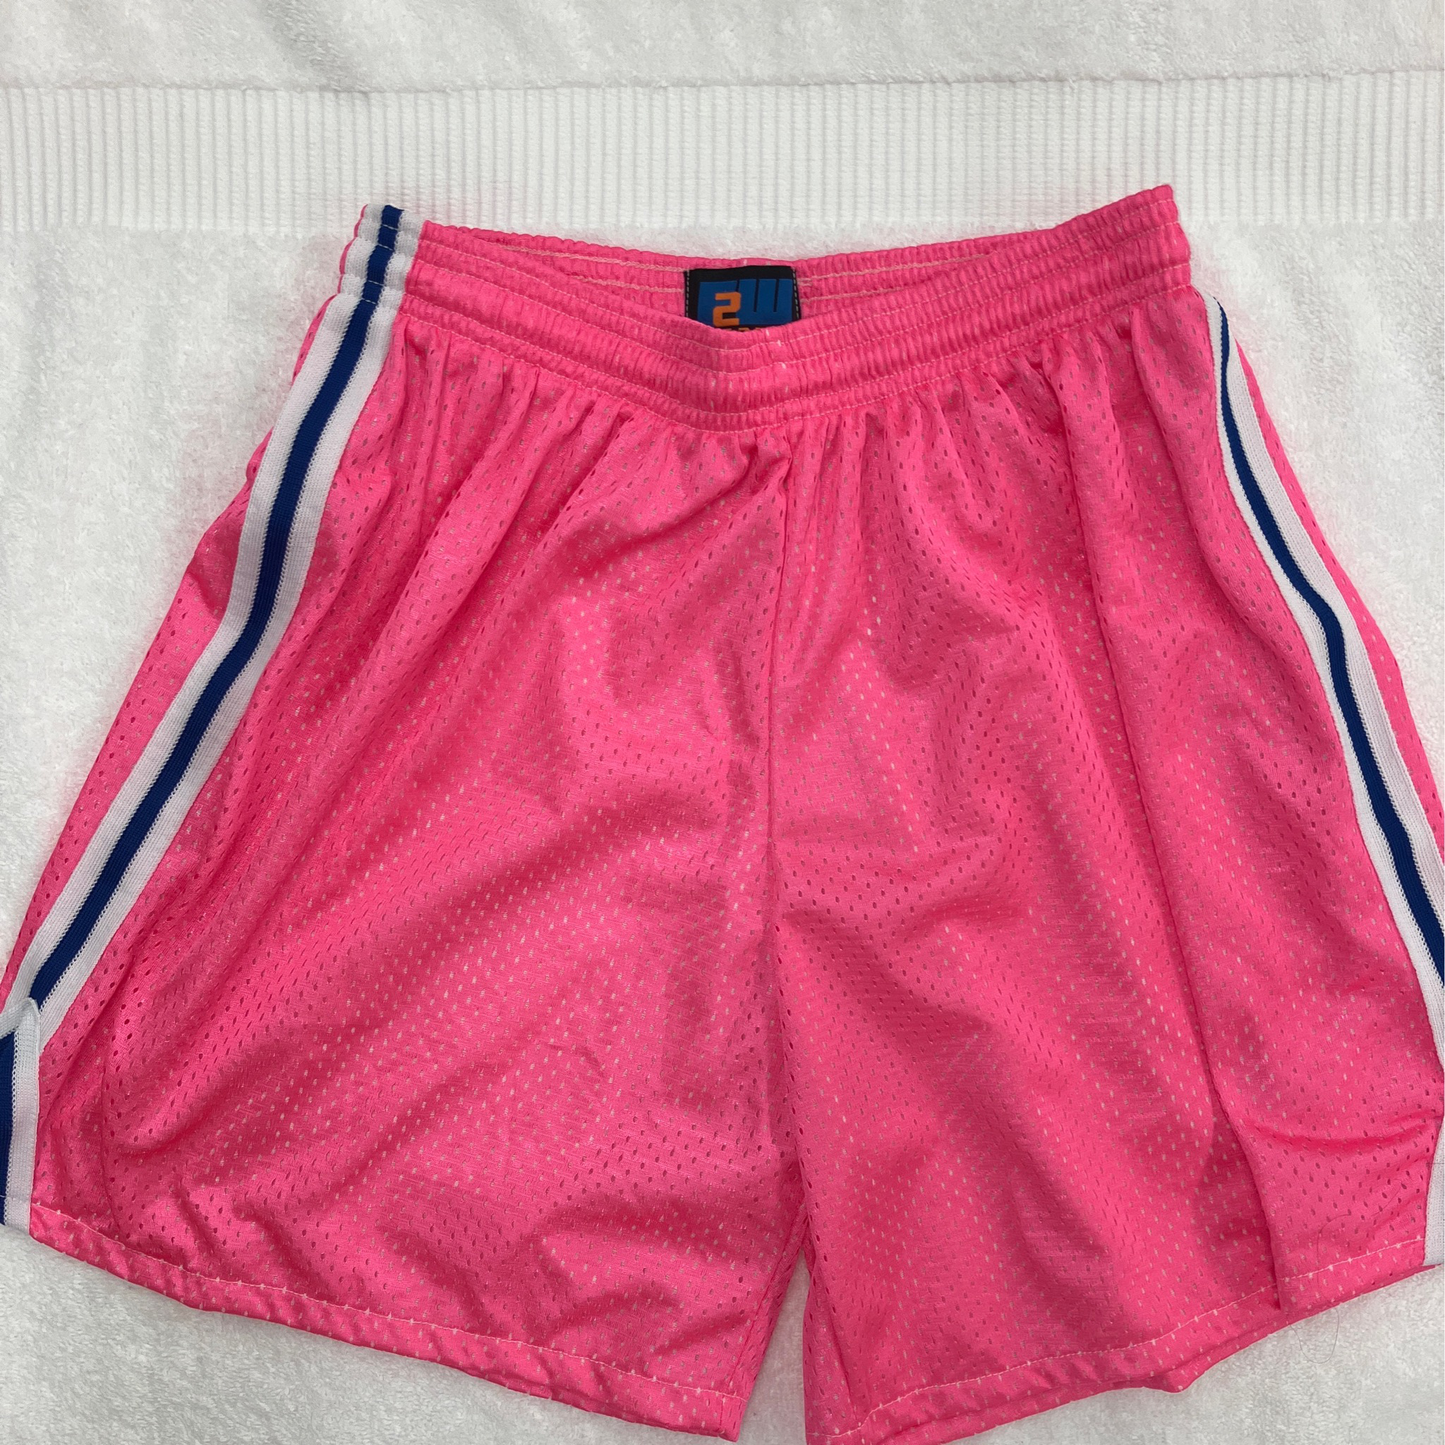 Fit 2 Win Adult Medium Hot Pink Ribbon Shorts